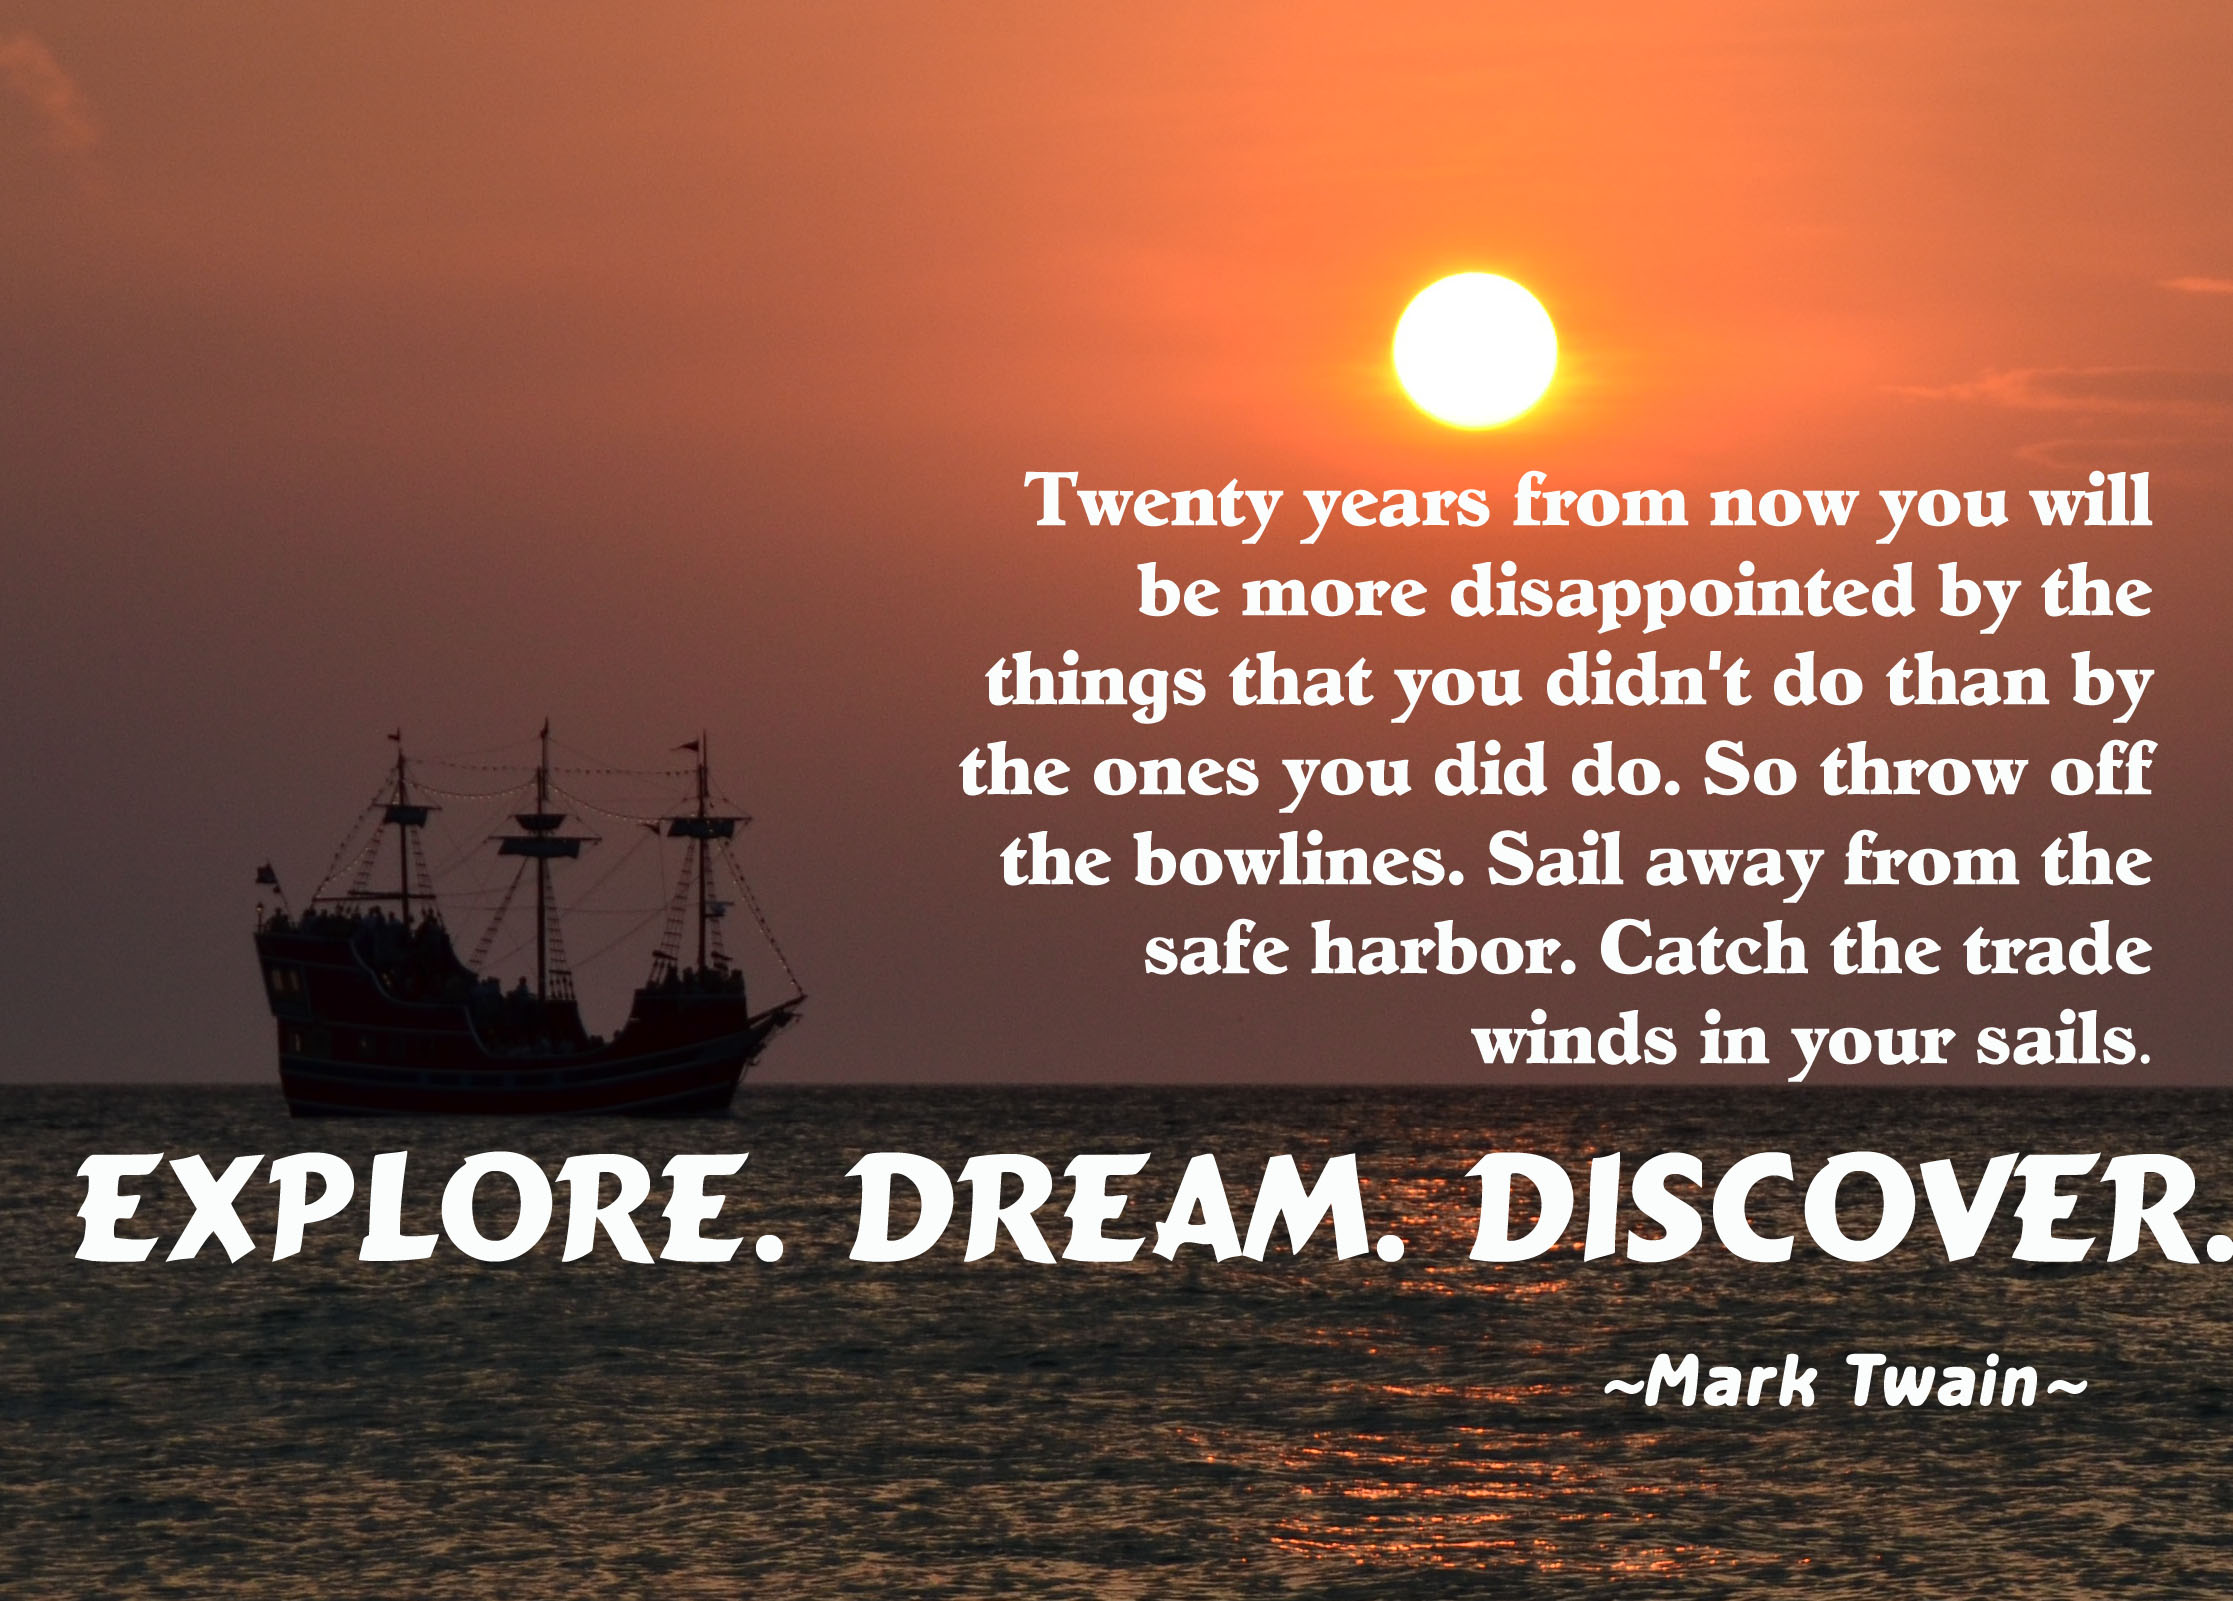 Mark Twain quote #2